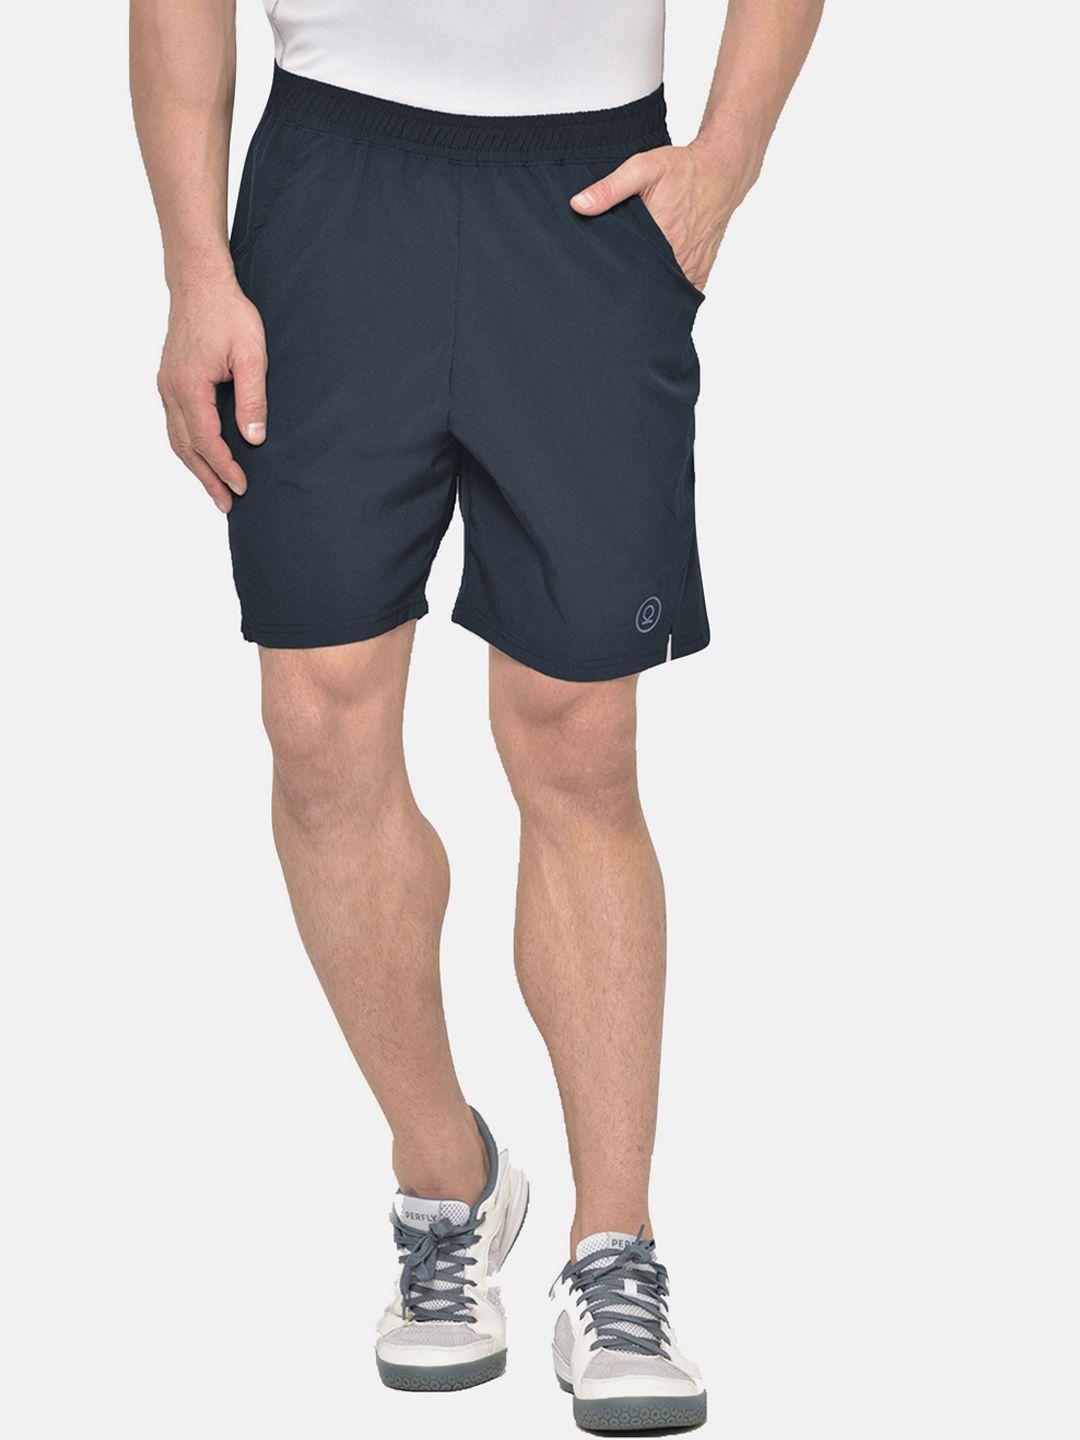 chkokko men blue running sports shorts